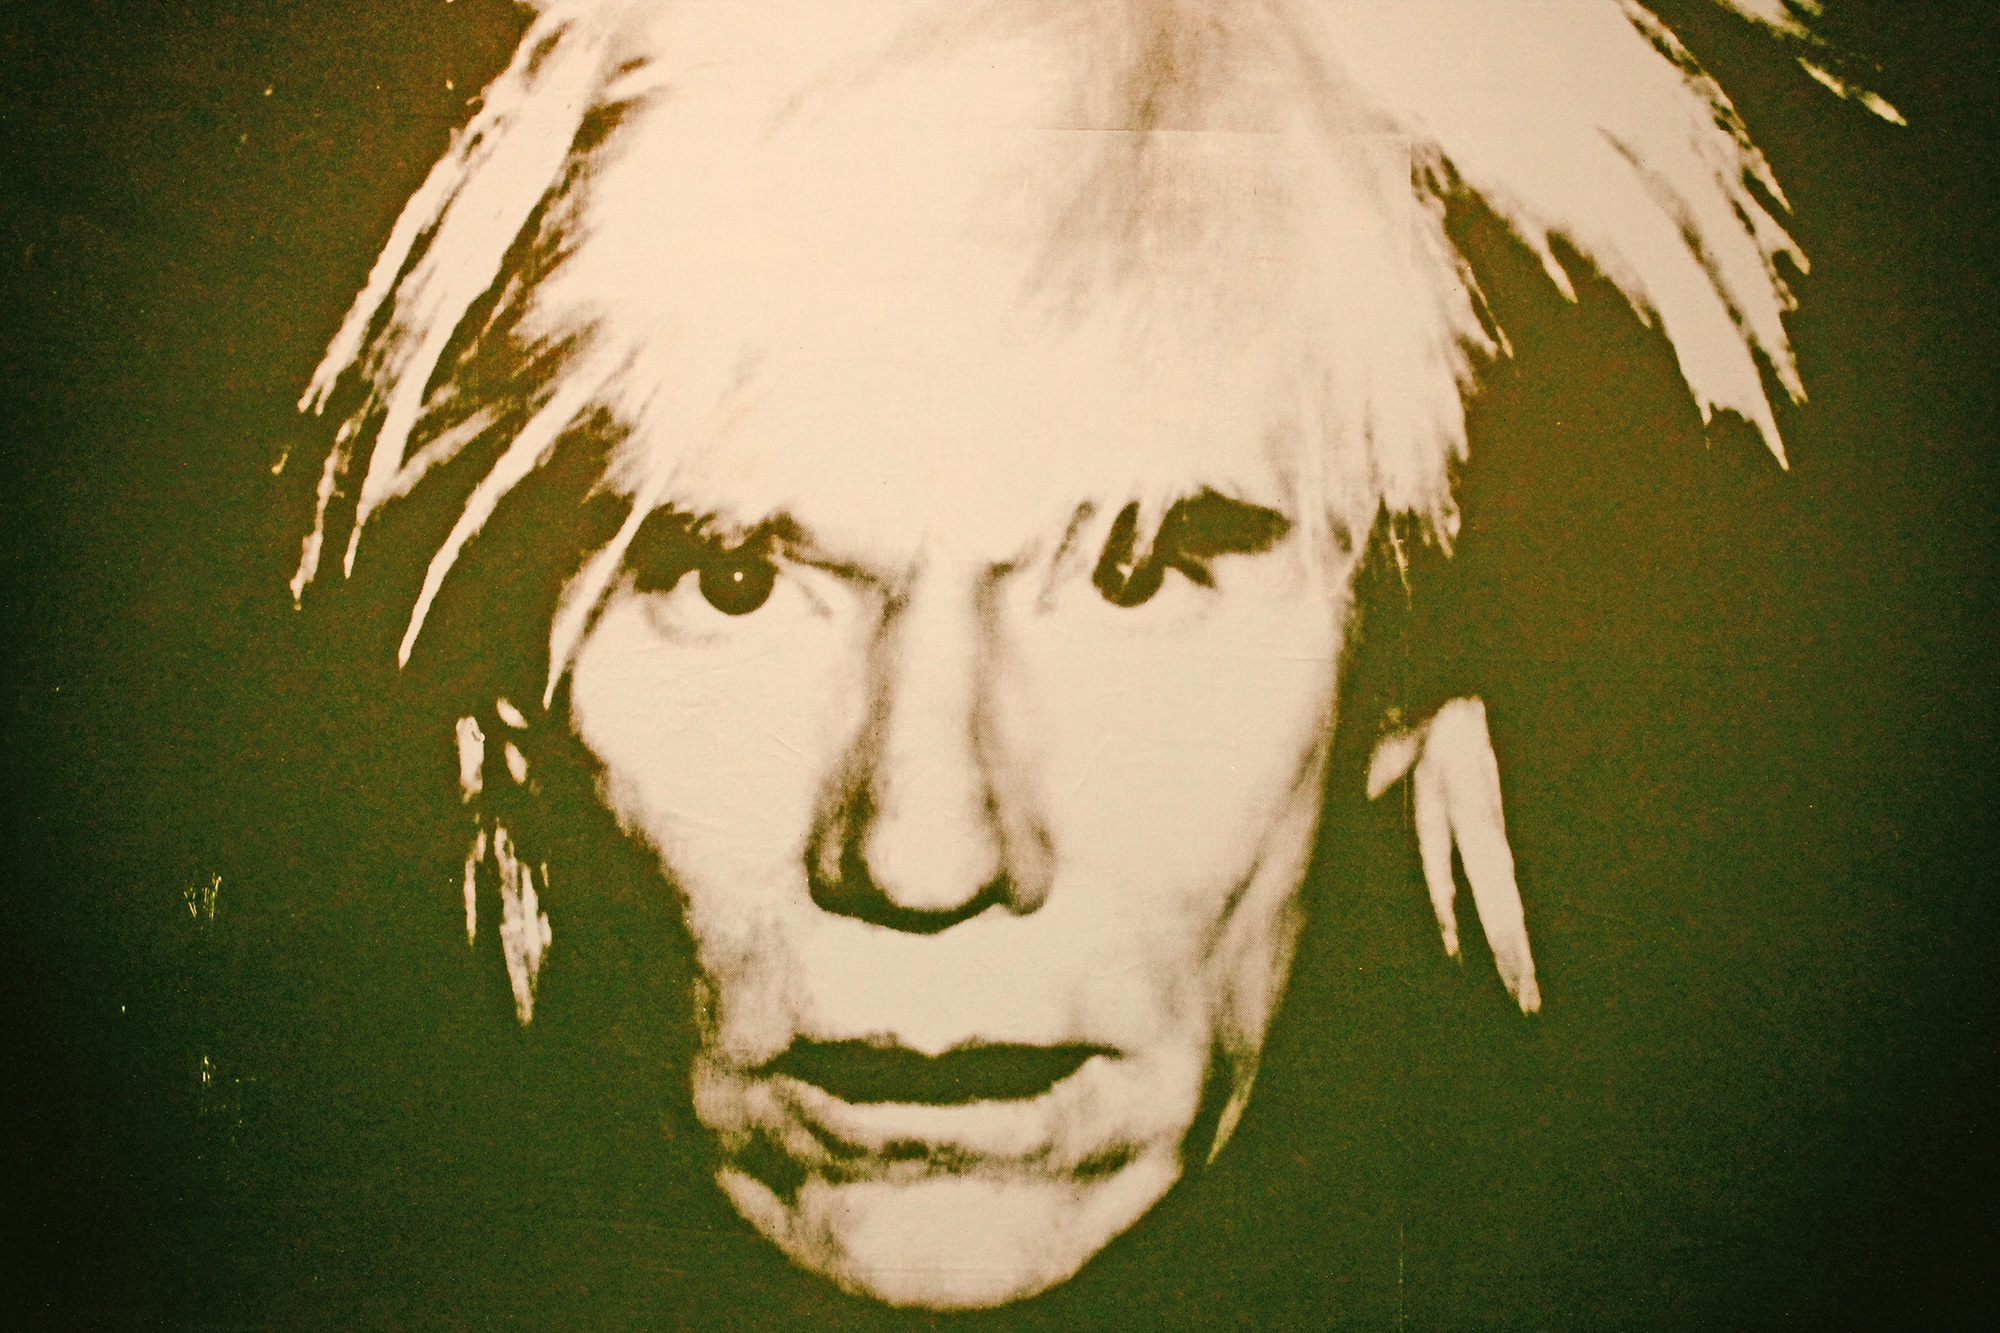 Andy Warhol Museum, Pittsburgh, PA